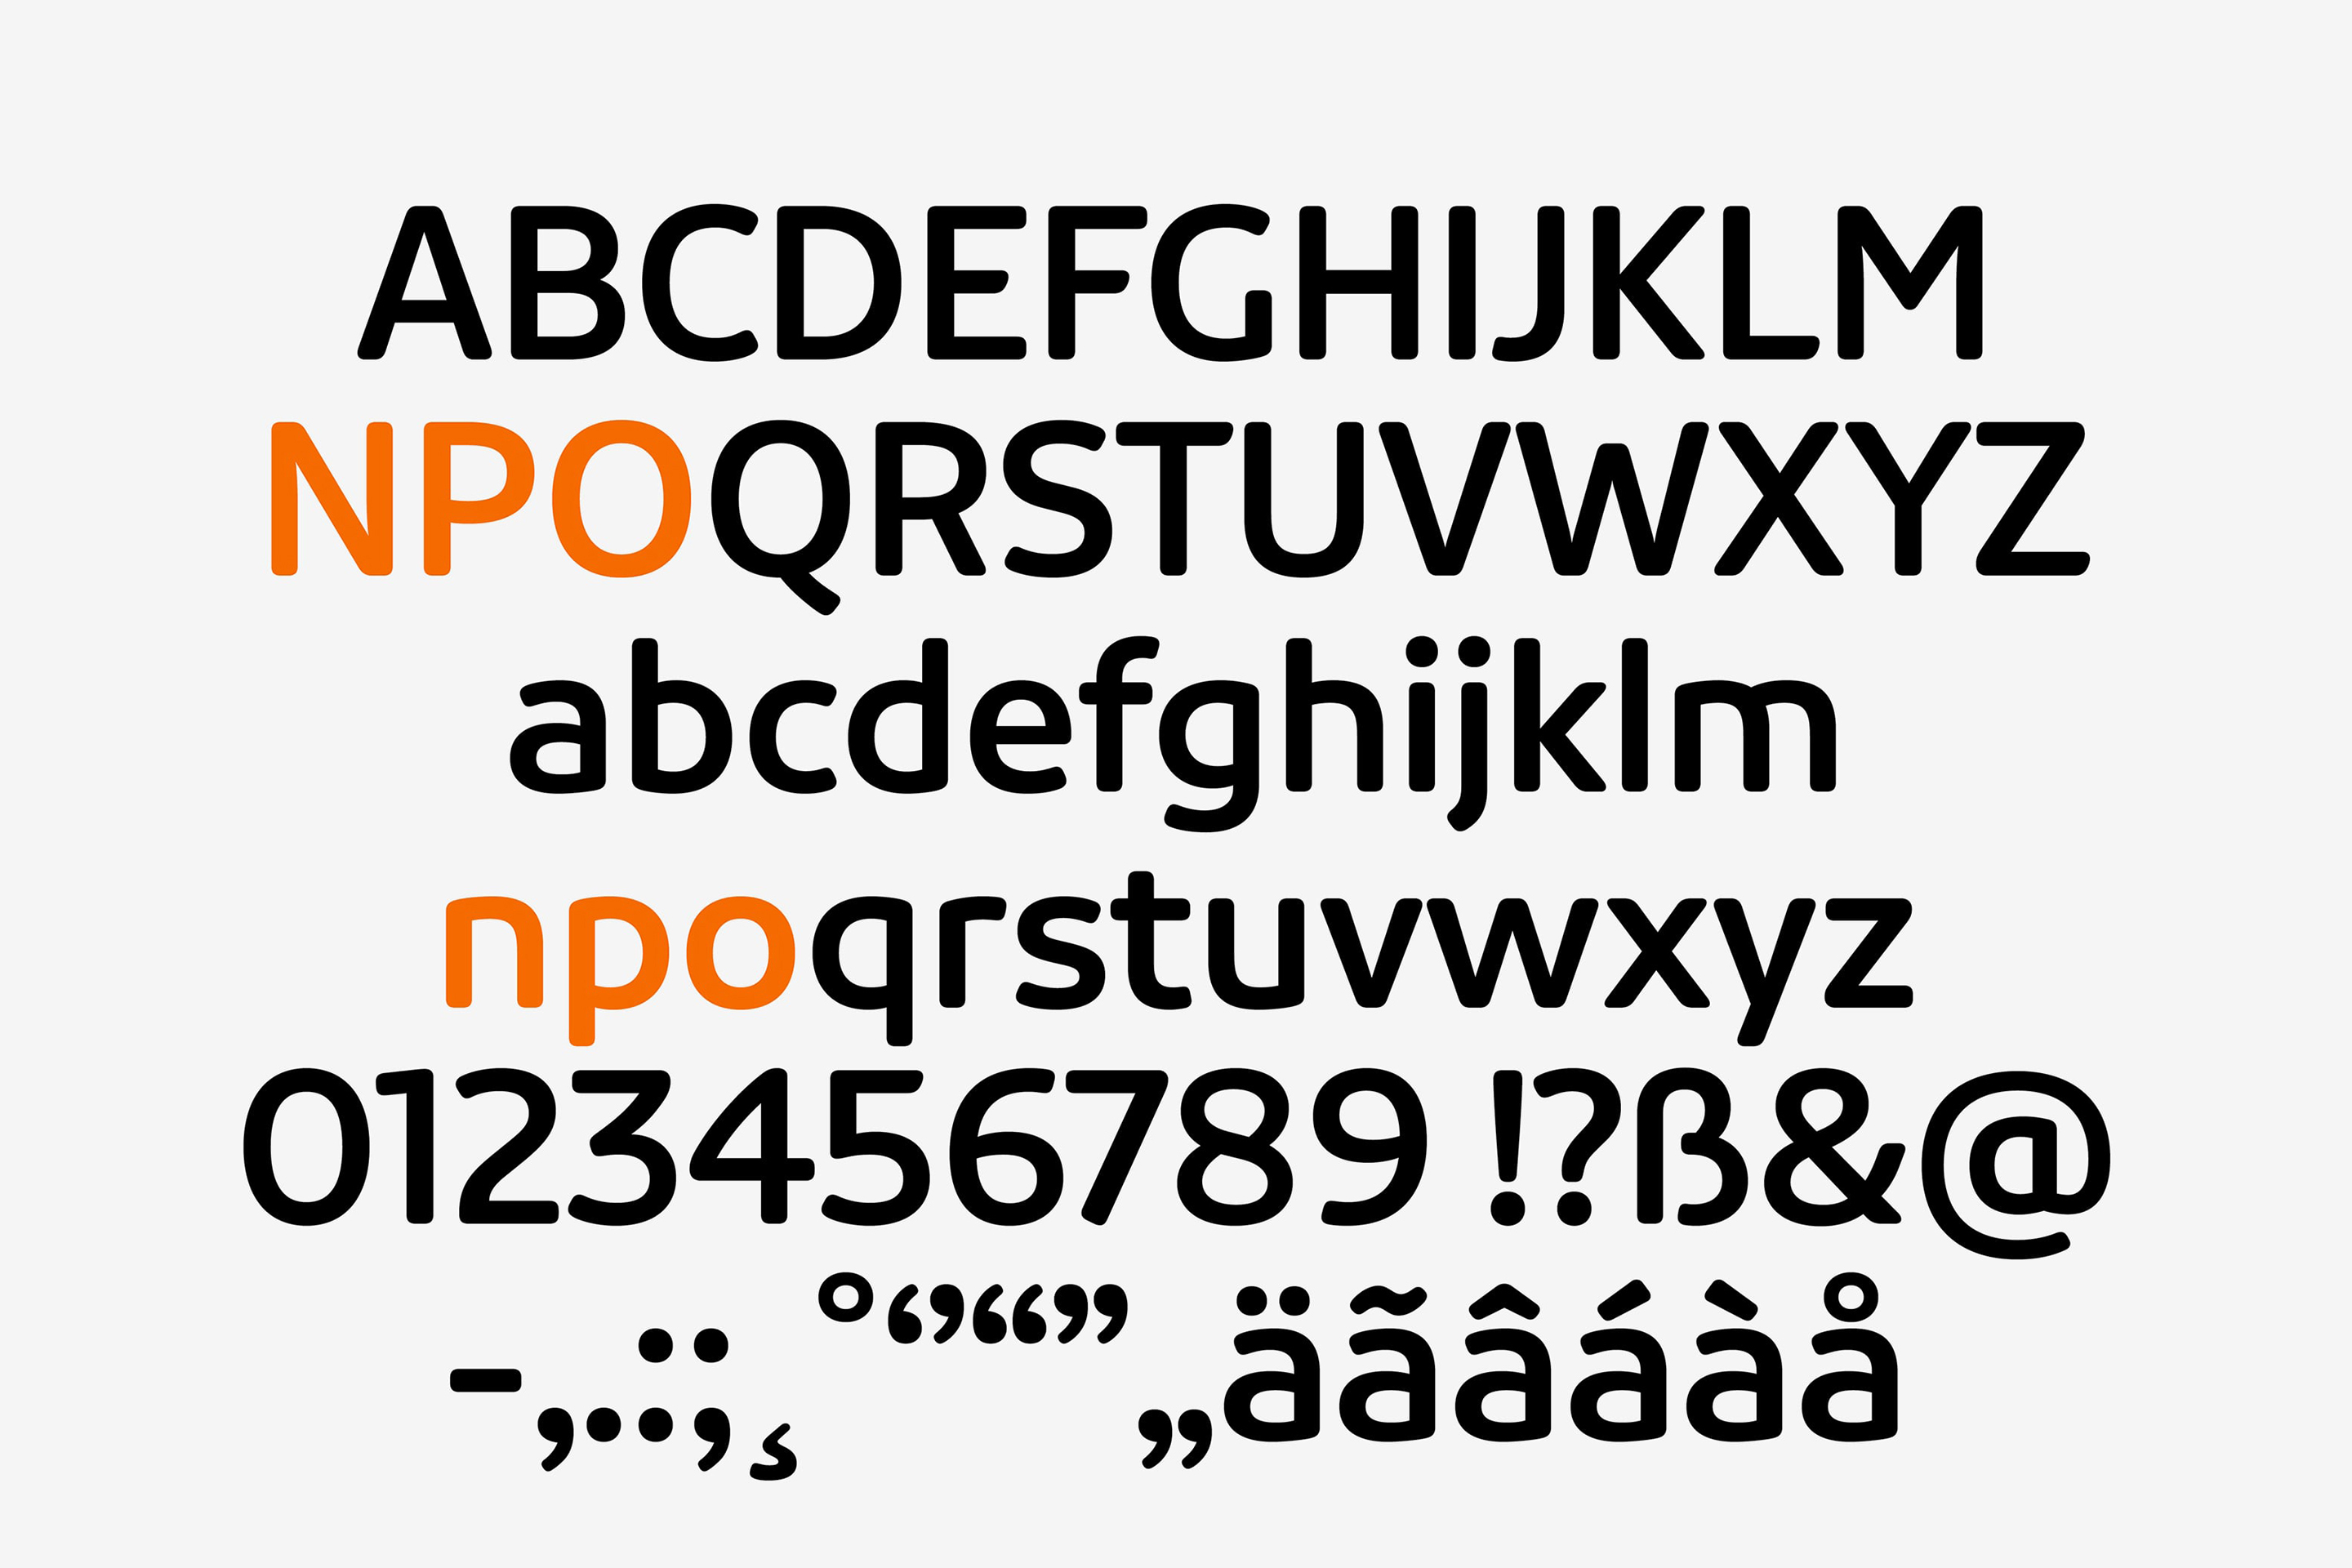 studio dumbar design visual brand identity NPO Netherlands Public Broadcasting NPO sans typography design